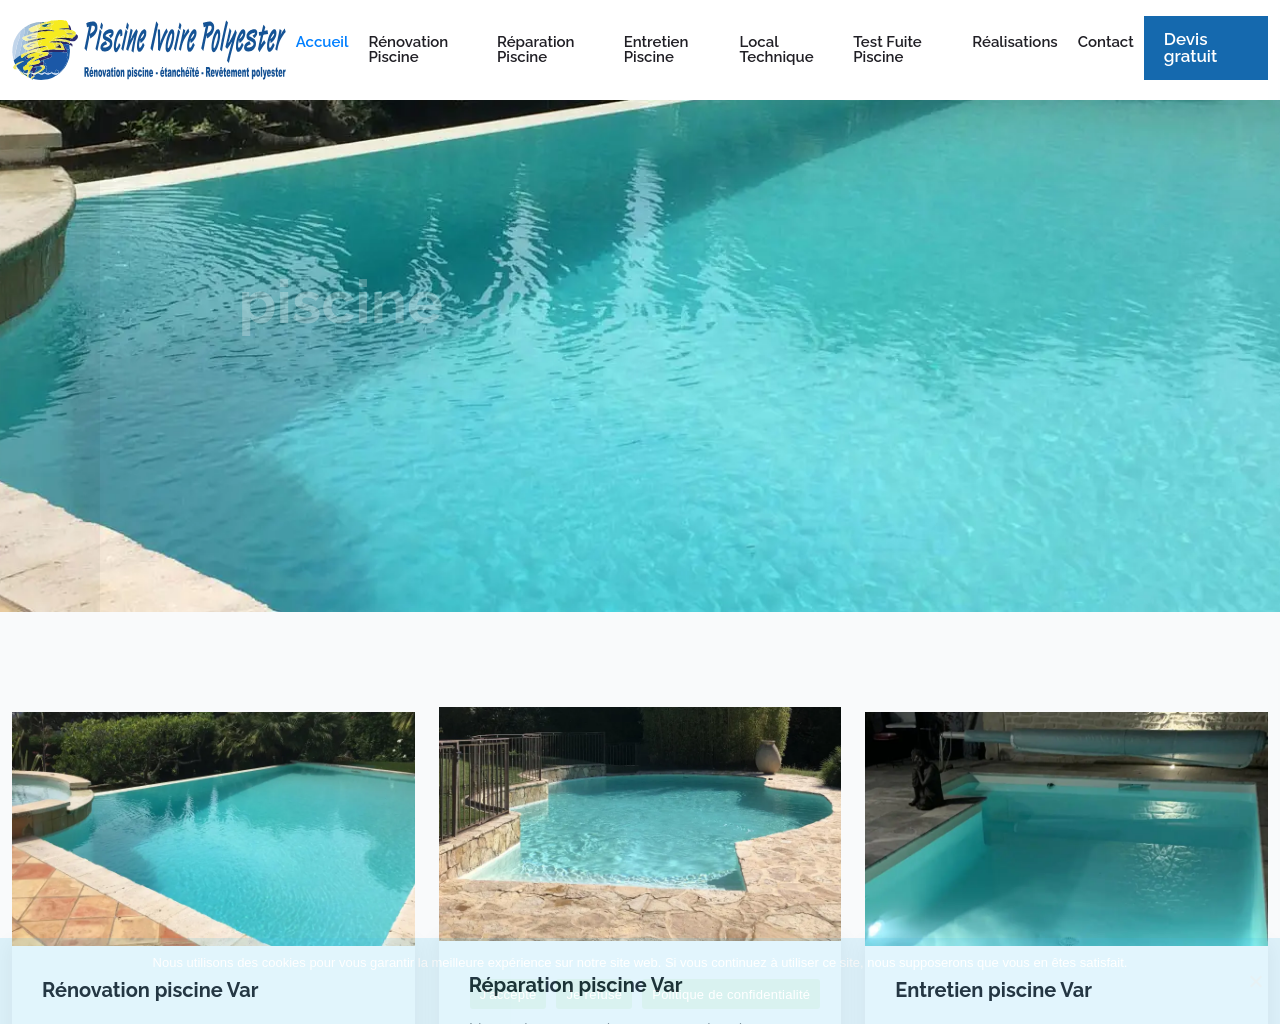 piscine-ivoire-polyester.com